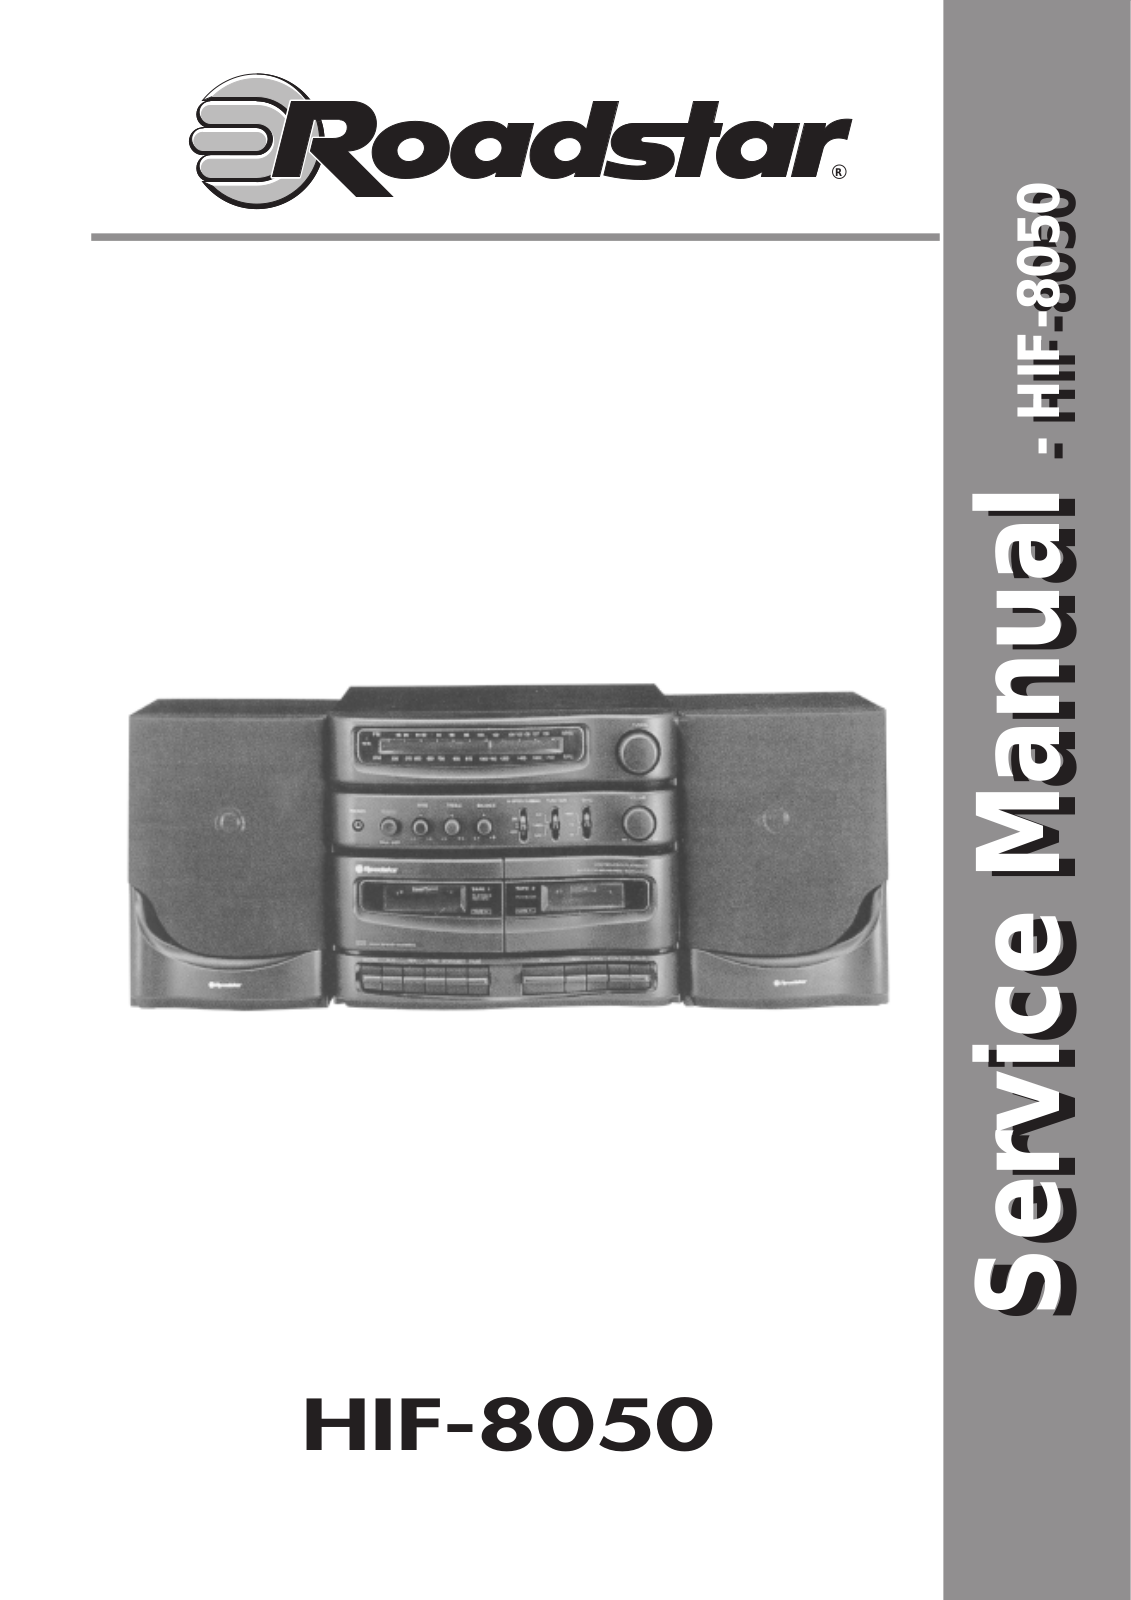 roadstar HIF-8050 Service Manual